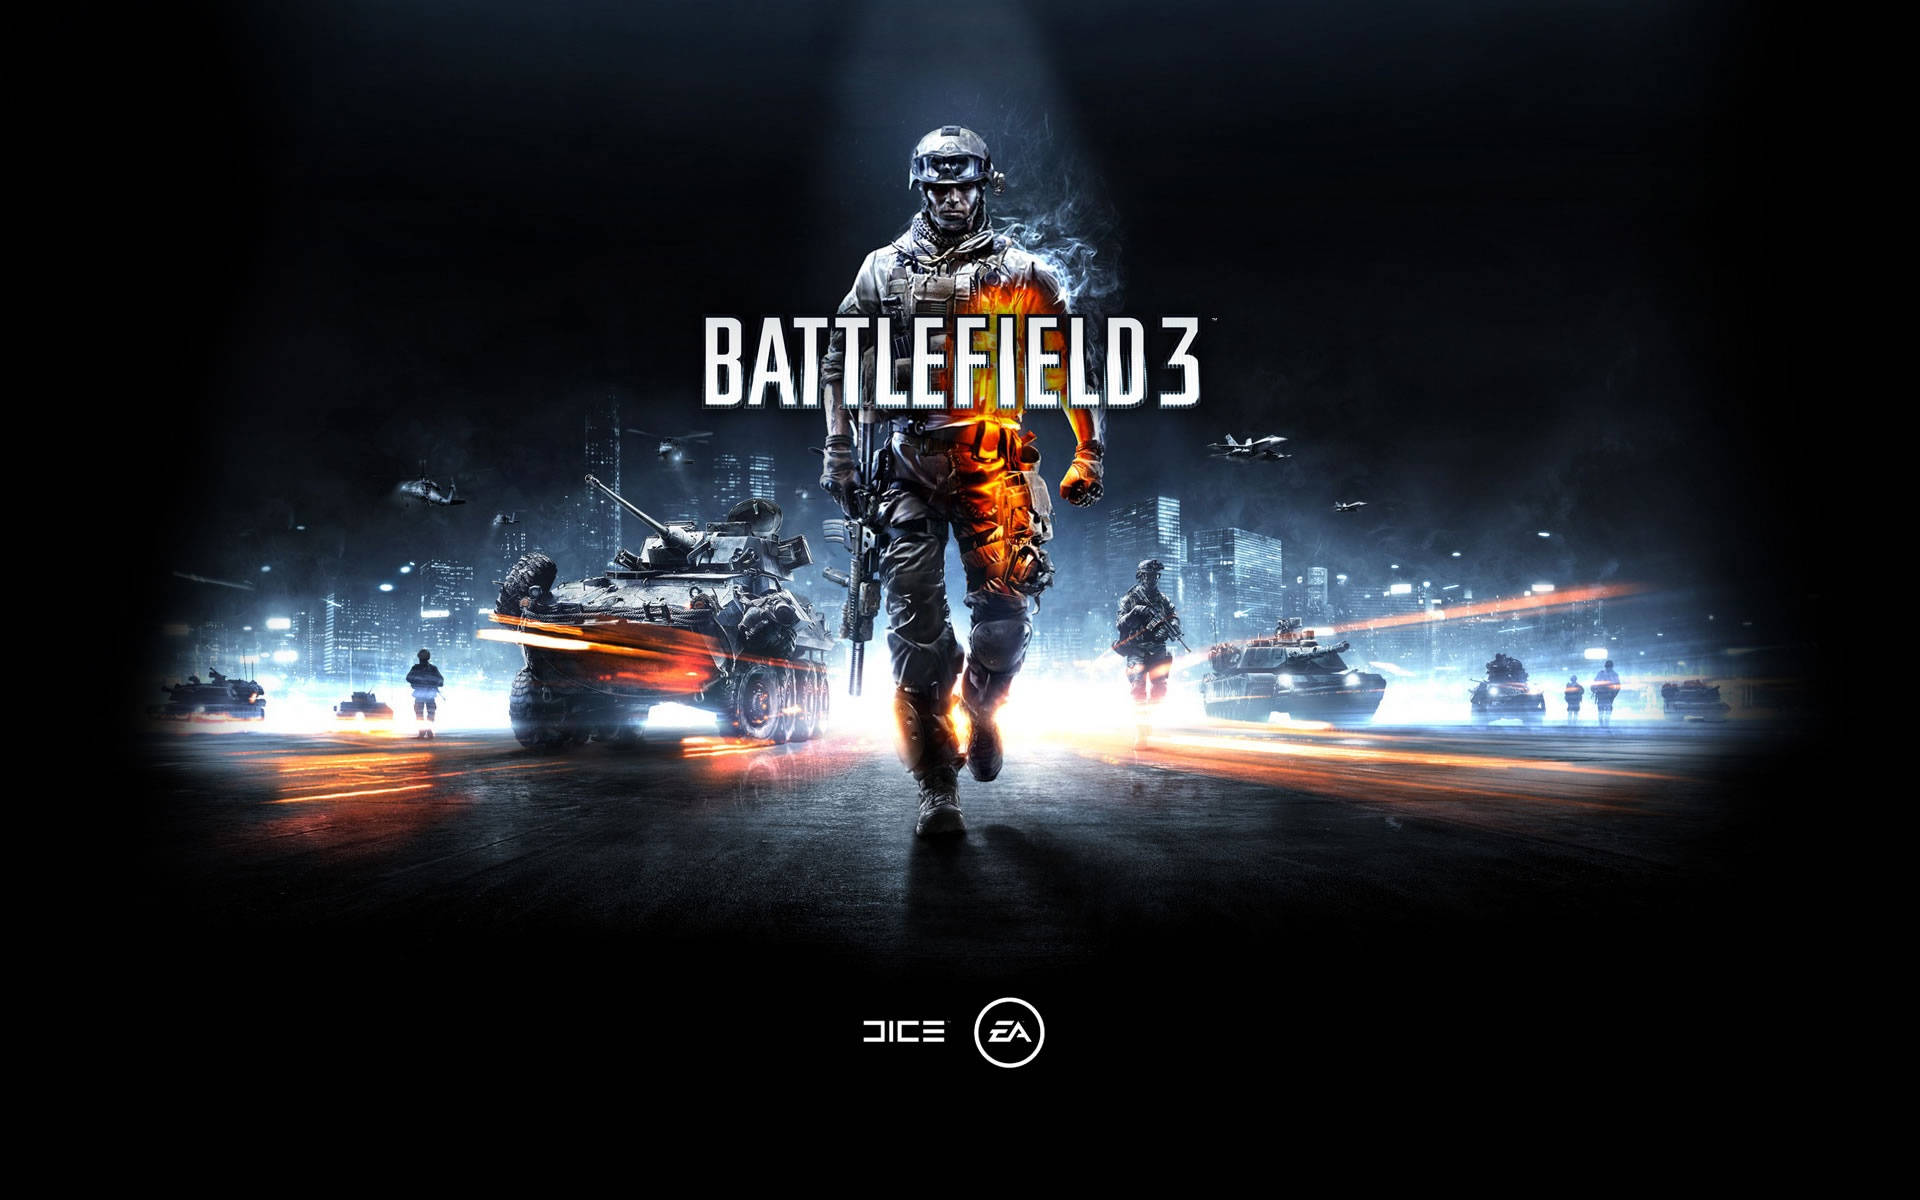 Battlefield 3 Gaming Poster Wallpaper